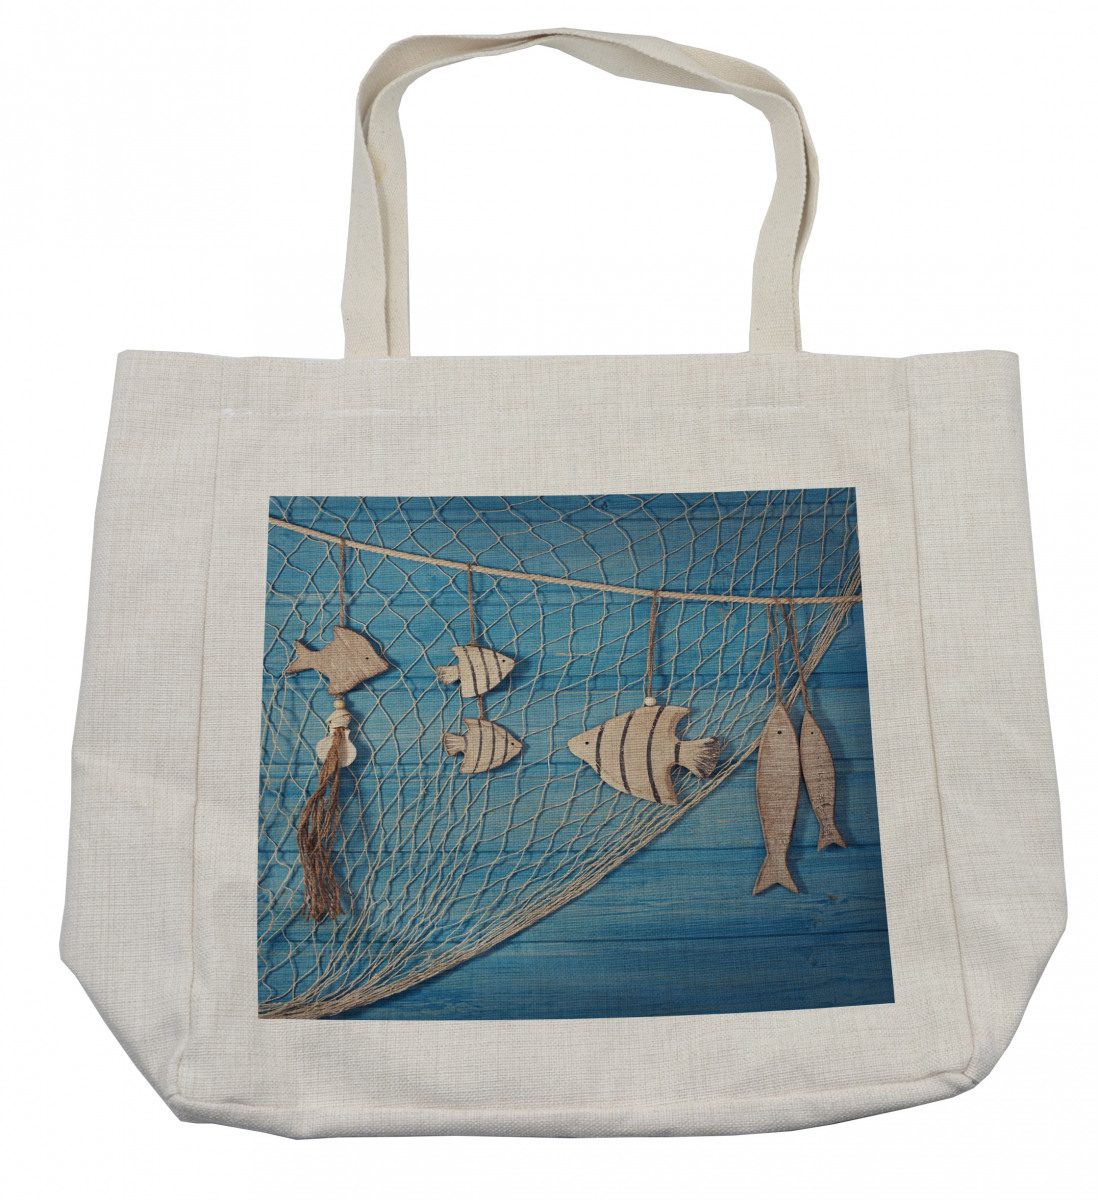 Wooden Fish Shell on Net Shopping Bag